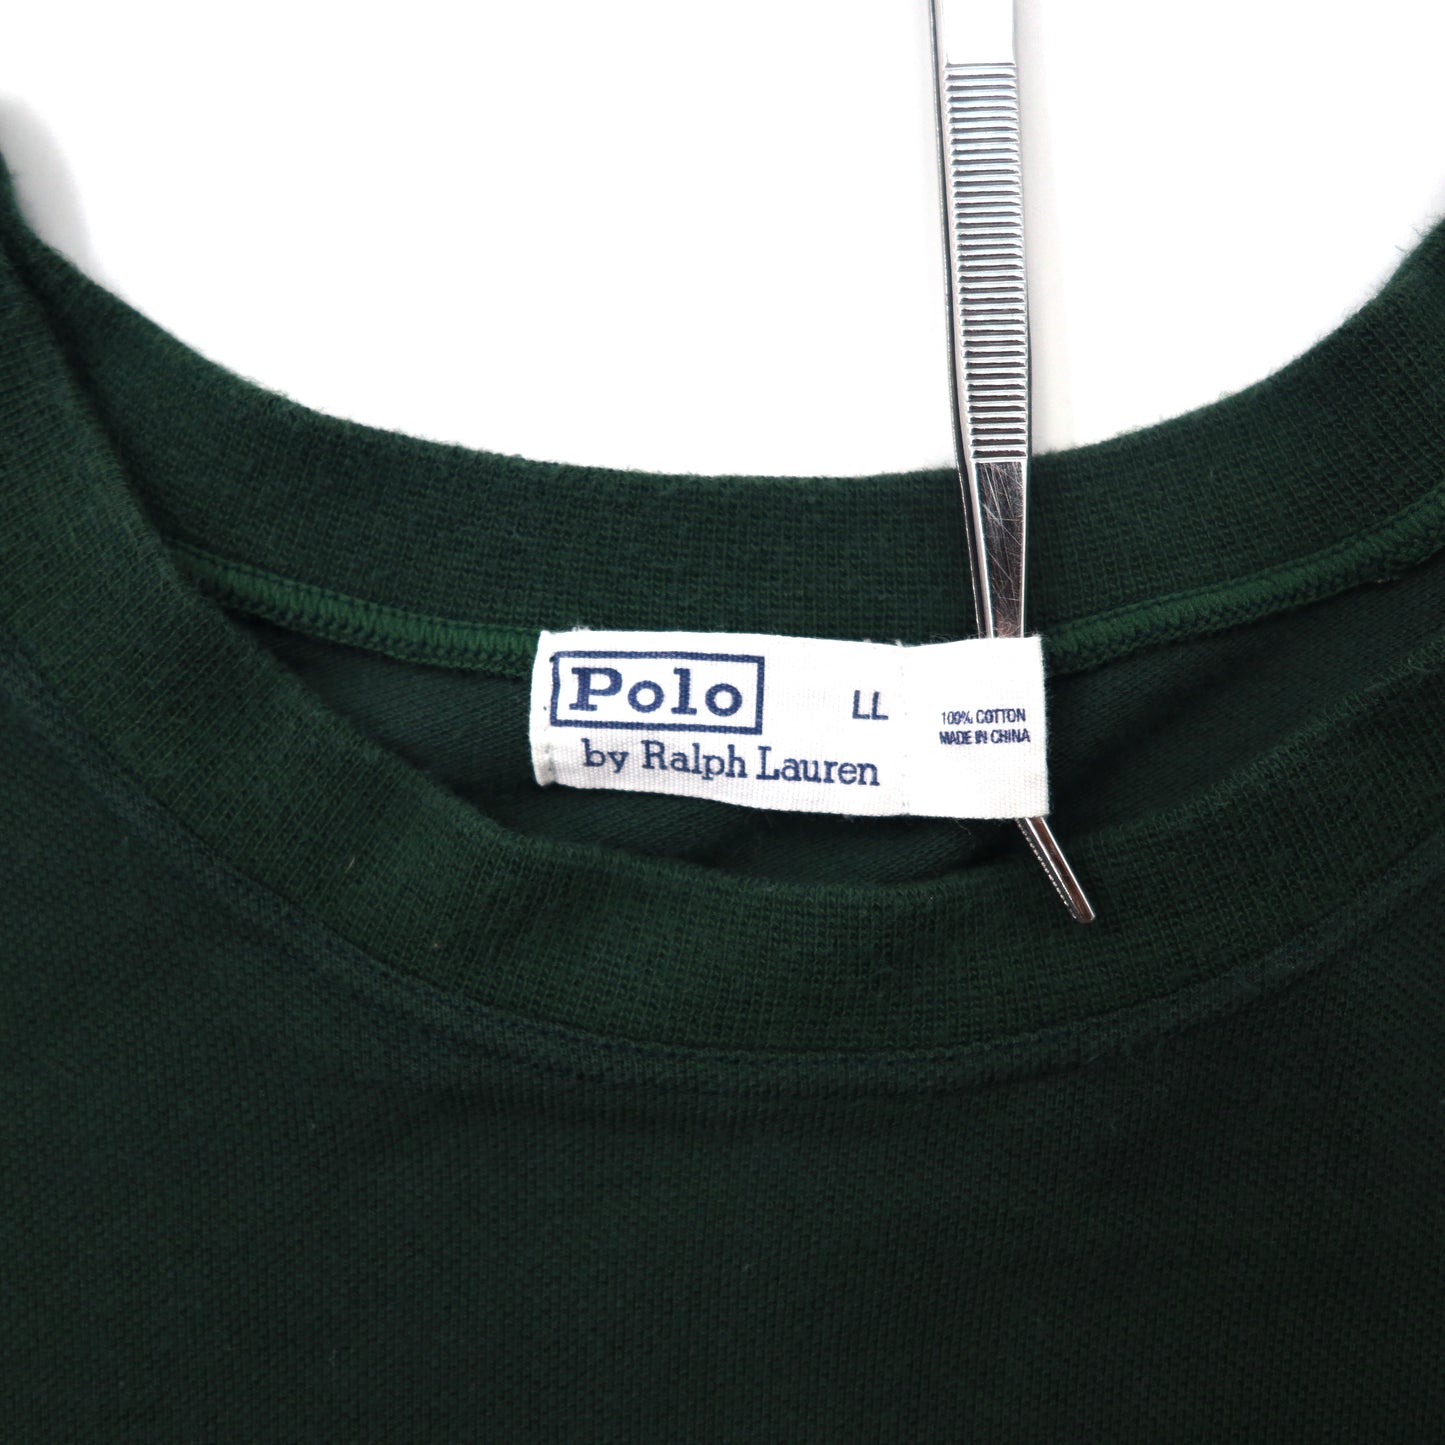 Polo by Ralph Lauren ロングスリーブTシャツ LL グリーン コットン スモールポニー刺繍